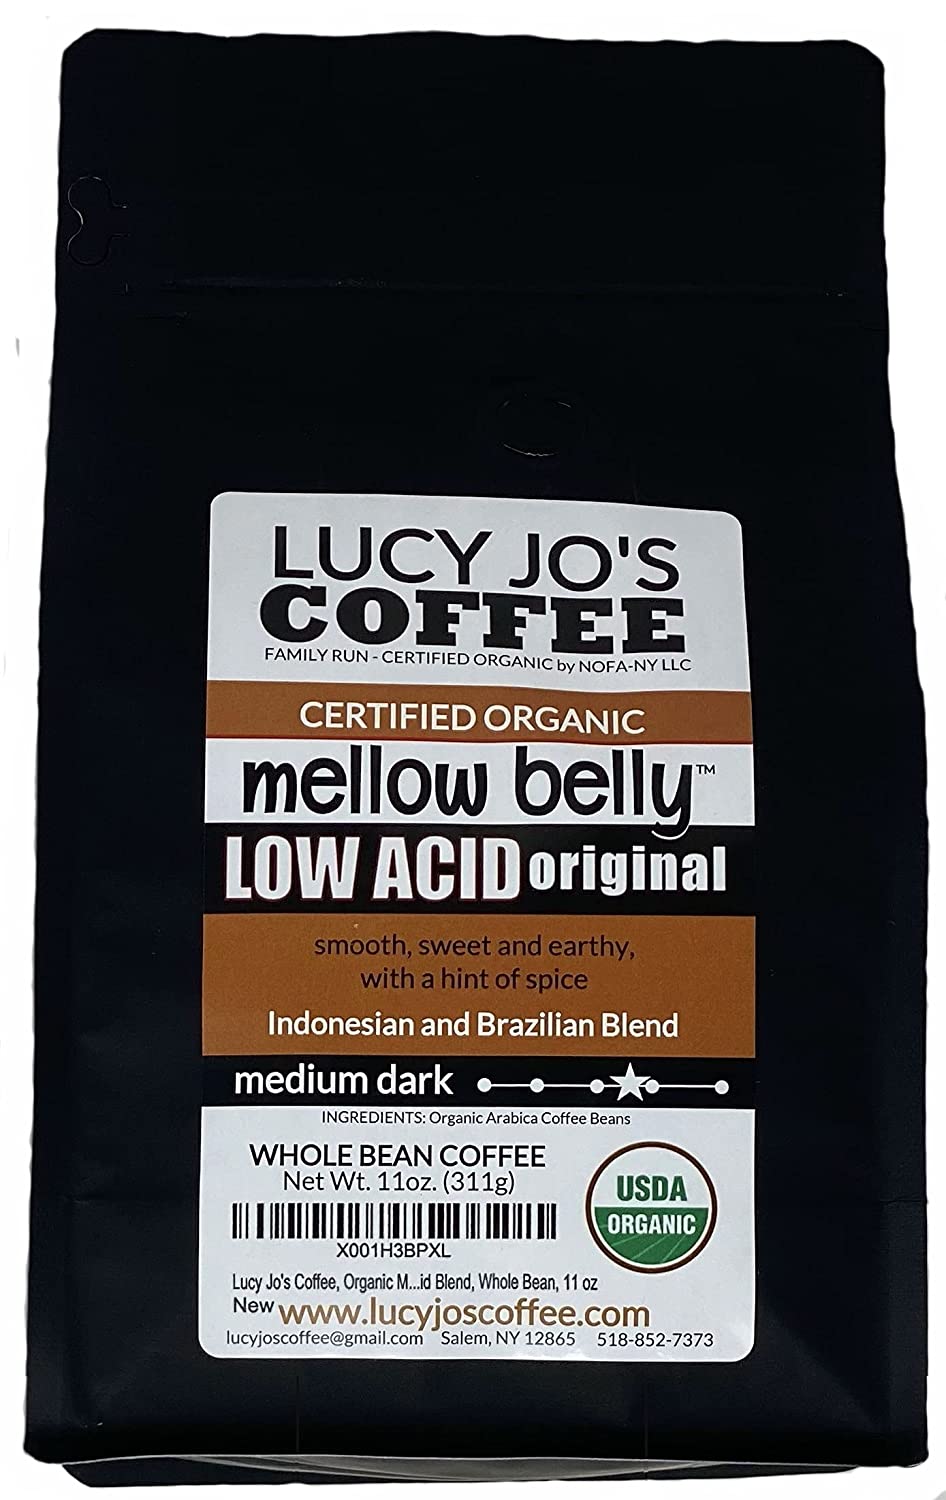 Lucy Jo's mellow belly low acid coffee